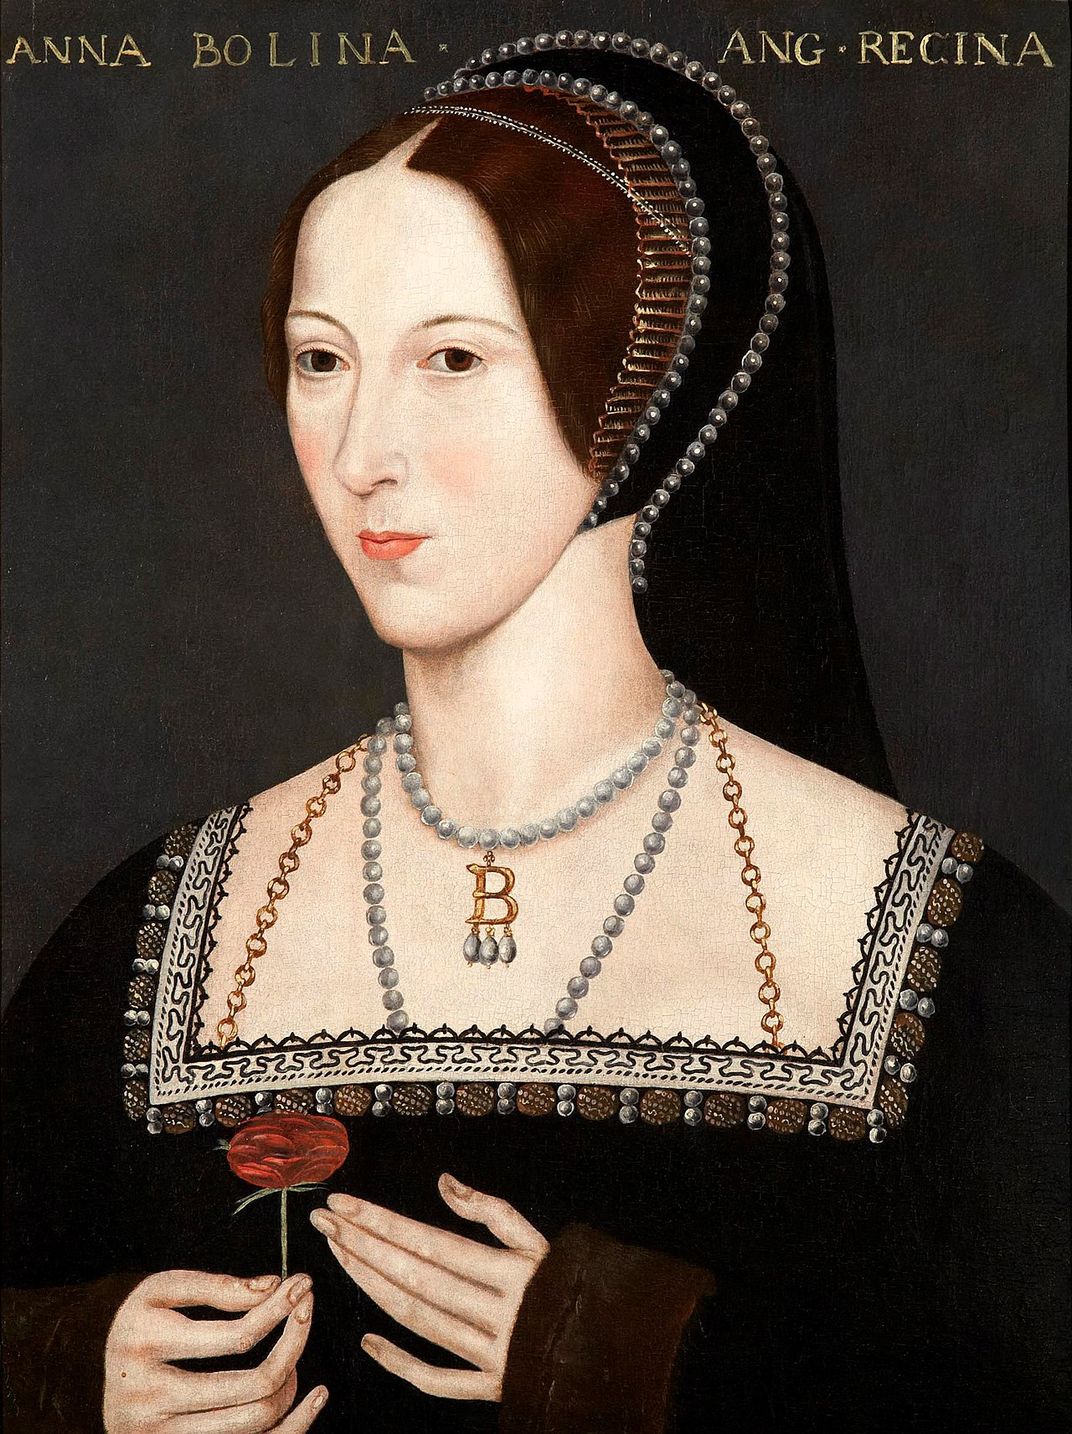 A near-contemporary painting of Anne Boleyn